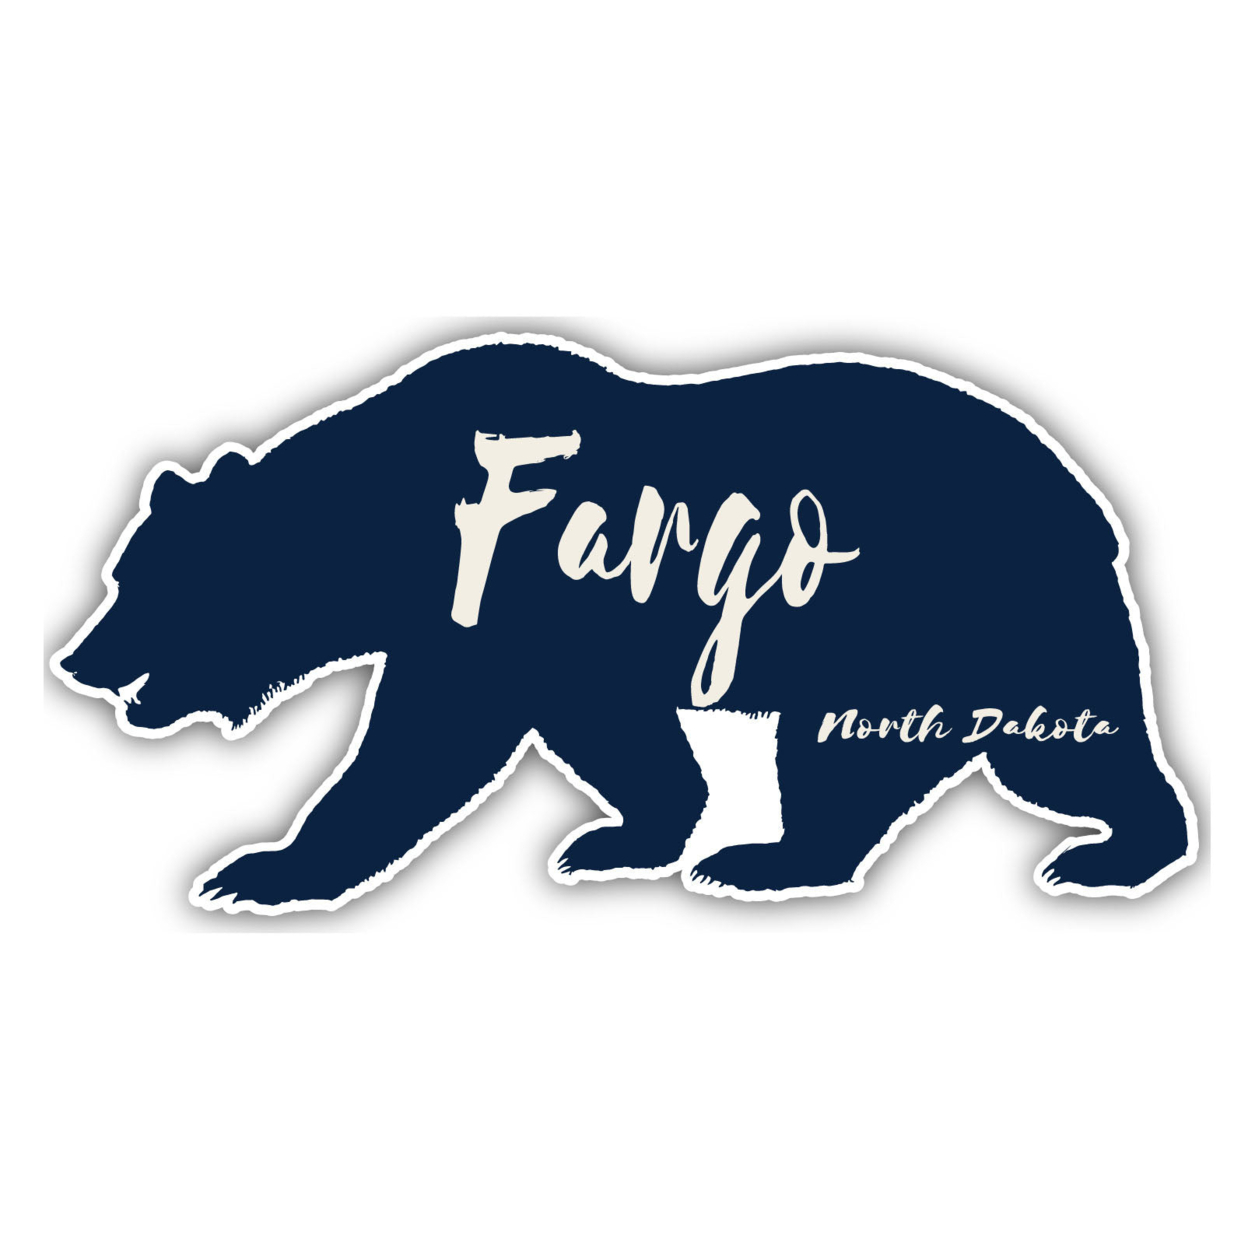 Fargo North Dakota Souvenir Decorative Stickers (Choose Theme And Size) - 4-Pack, 2-Inch, Tent